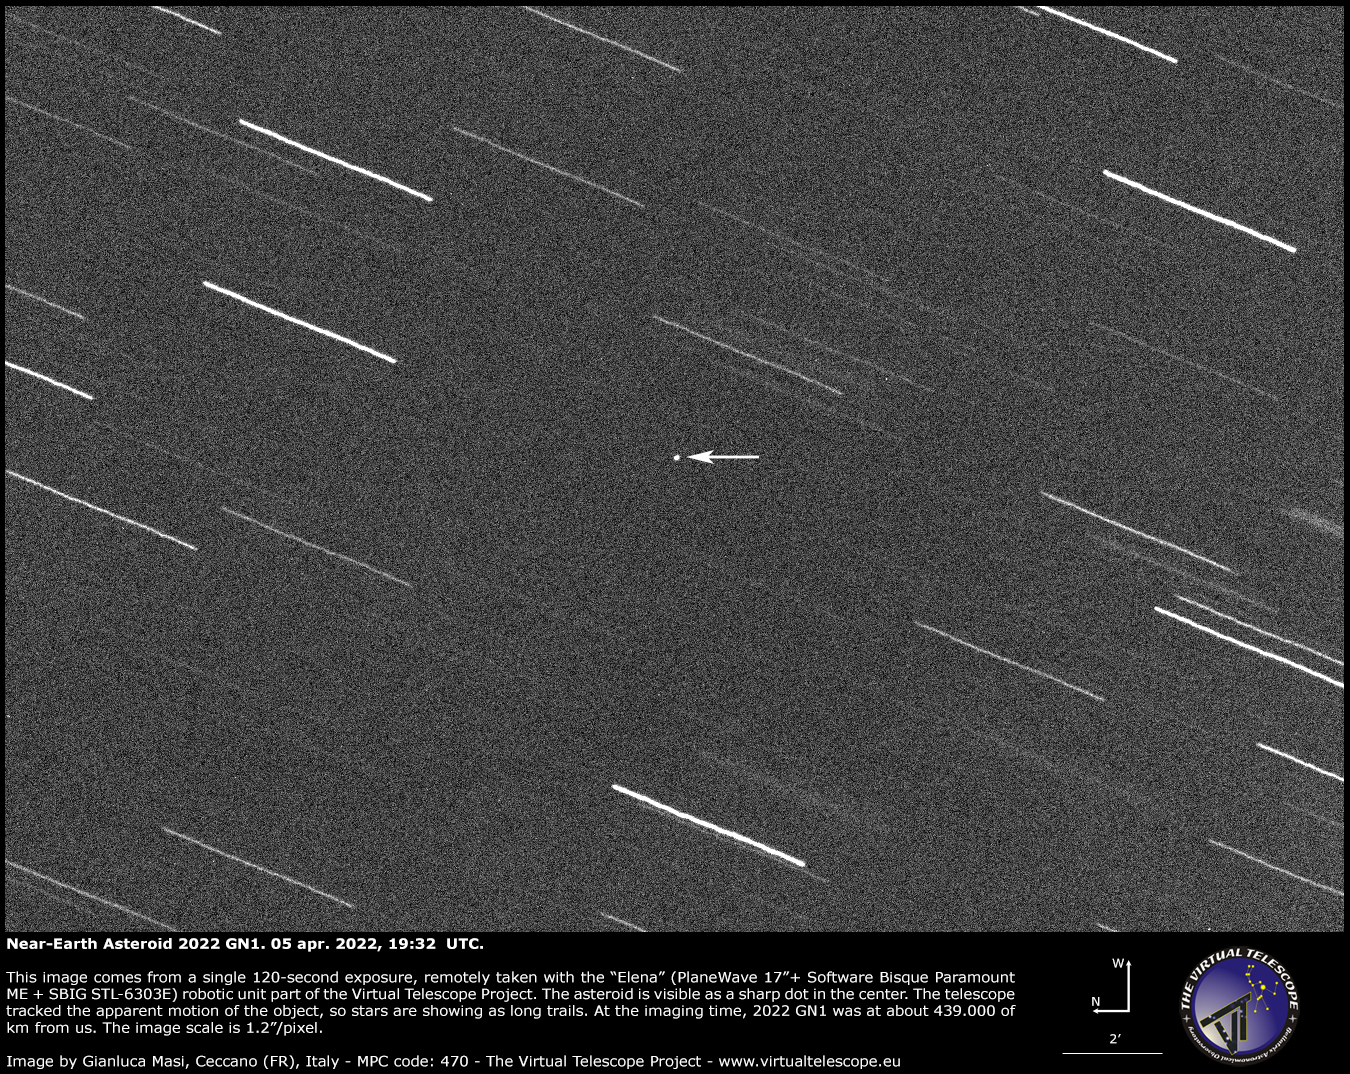 Near-Earth Asteroid 2022 GN1:5 Apr. 2022.